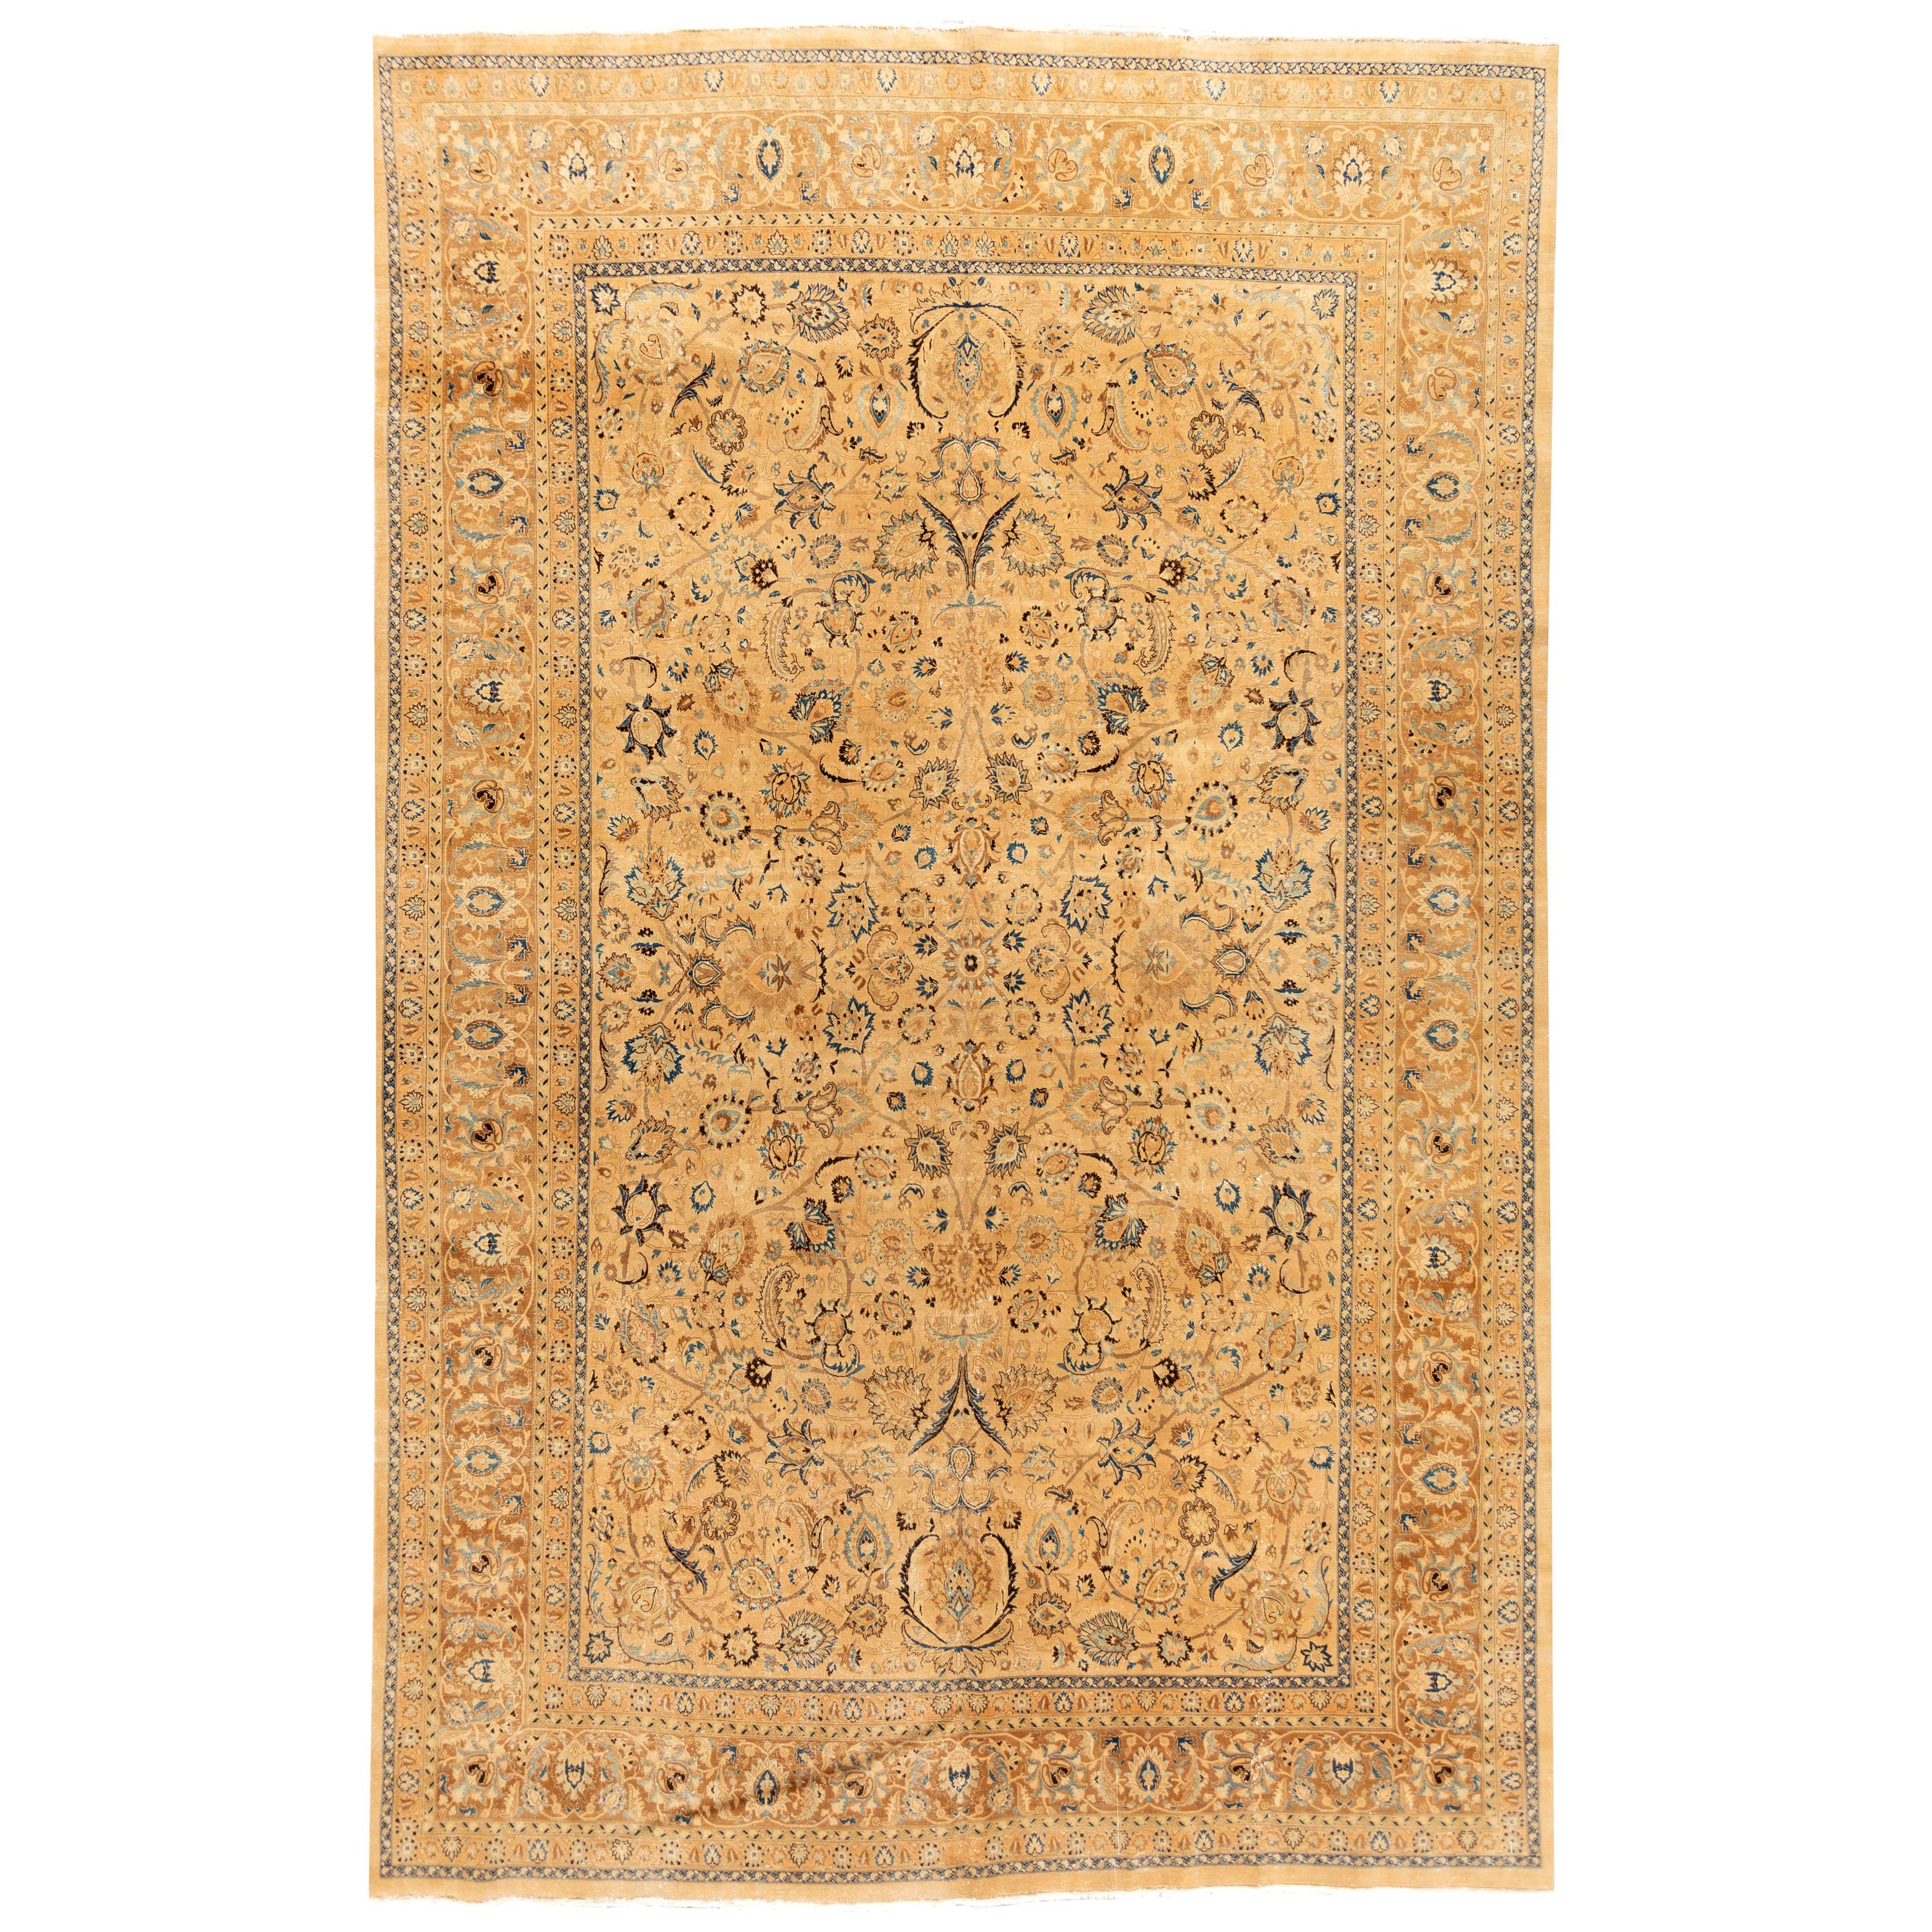 Early 20th Century Antique Tabriz Wool Rug